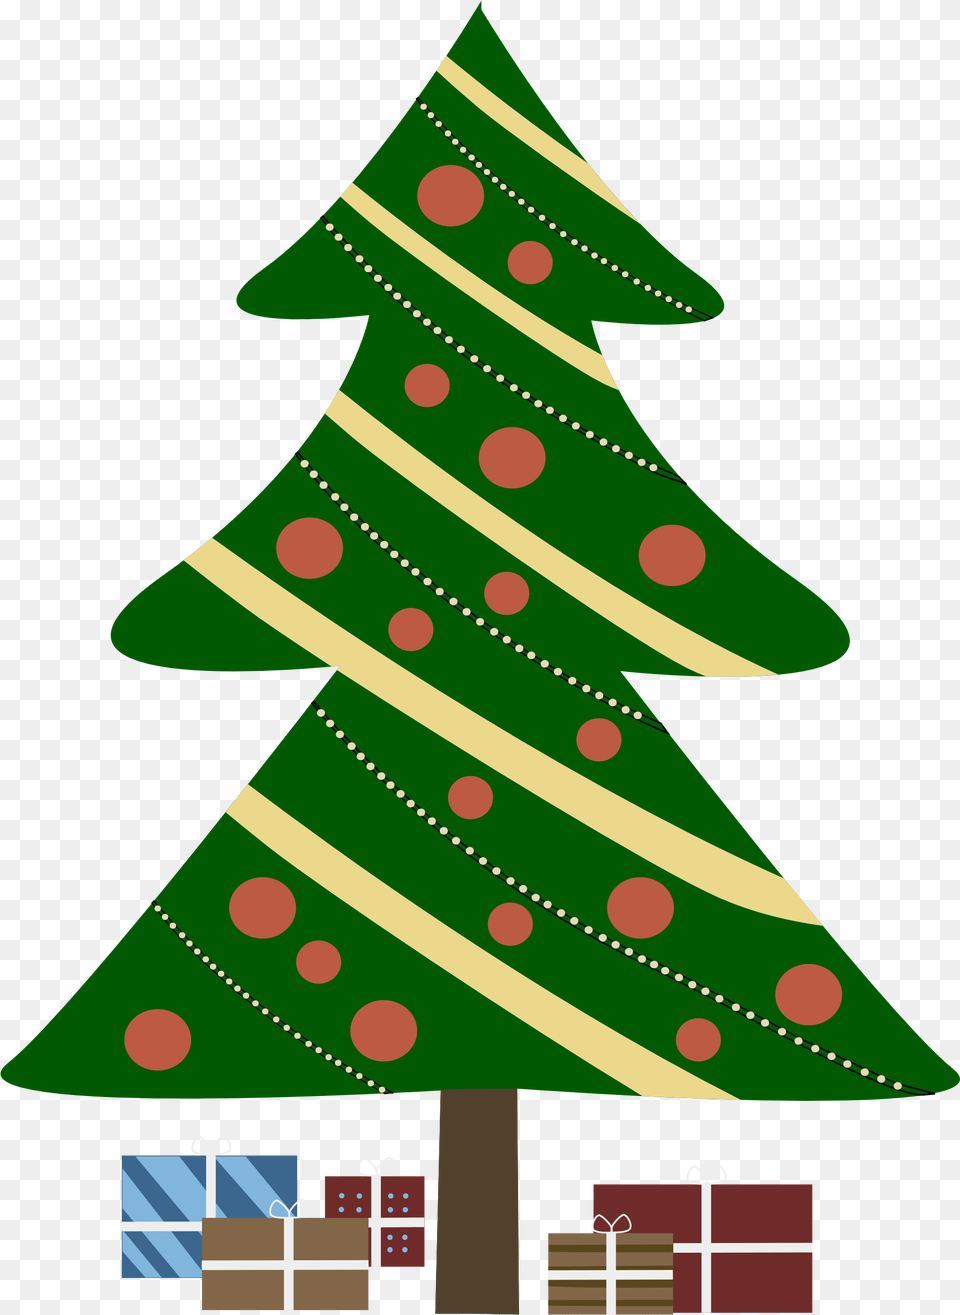 Xmas Stuff For Animated Christmas Tree Cute Christmas Tree, Christmas Decorations, Festival, Christmas Tree, Rocket Free Png